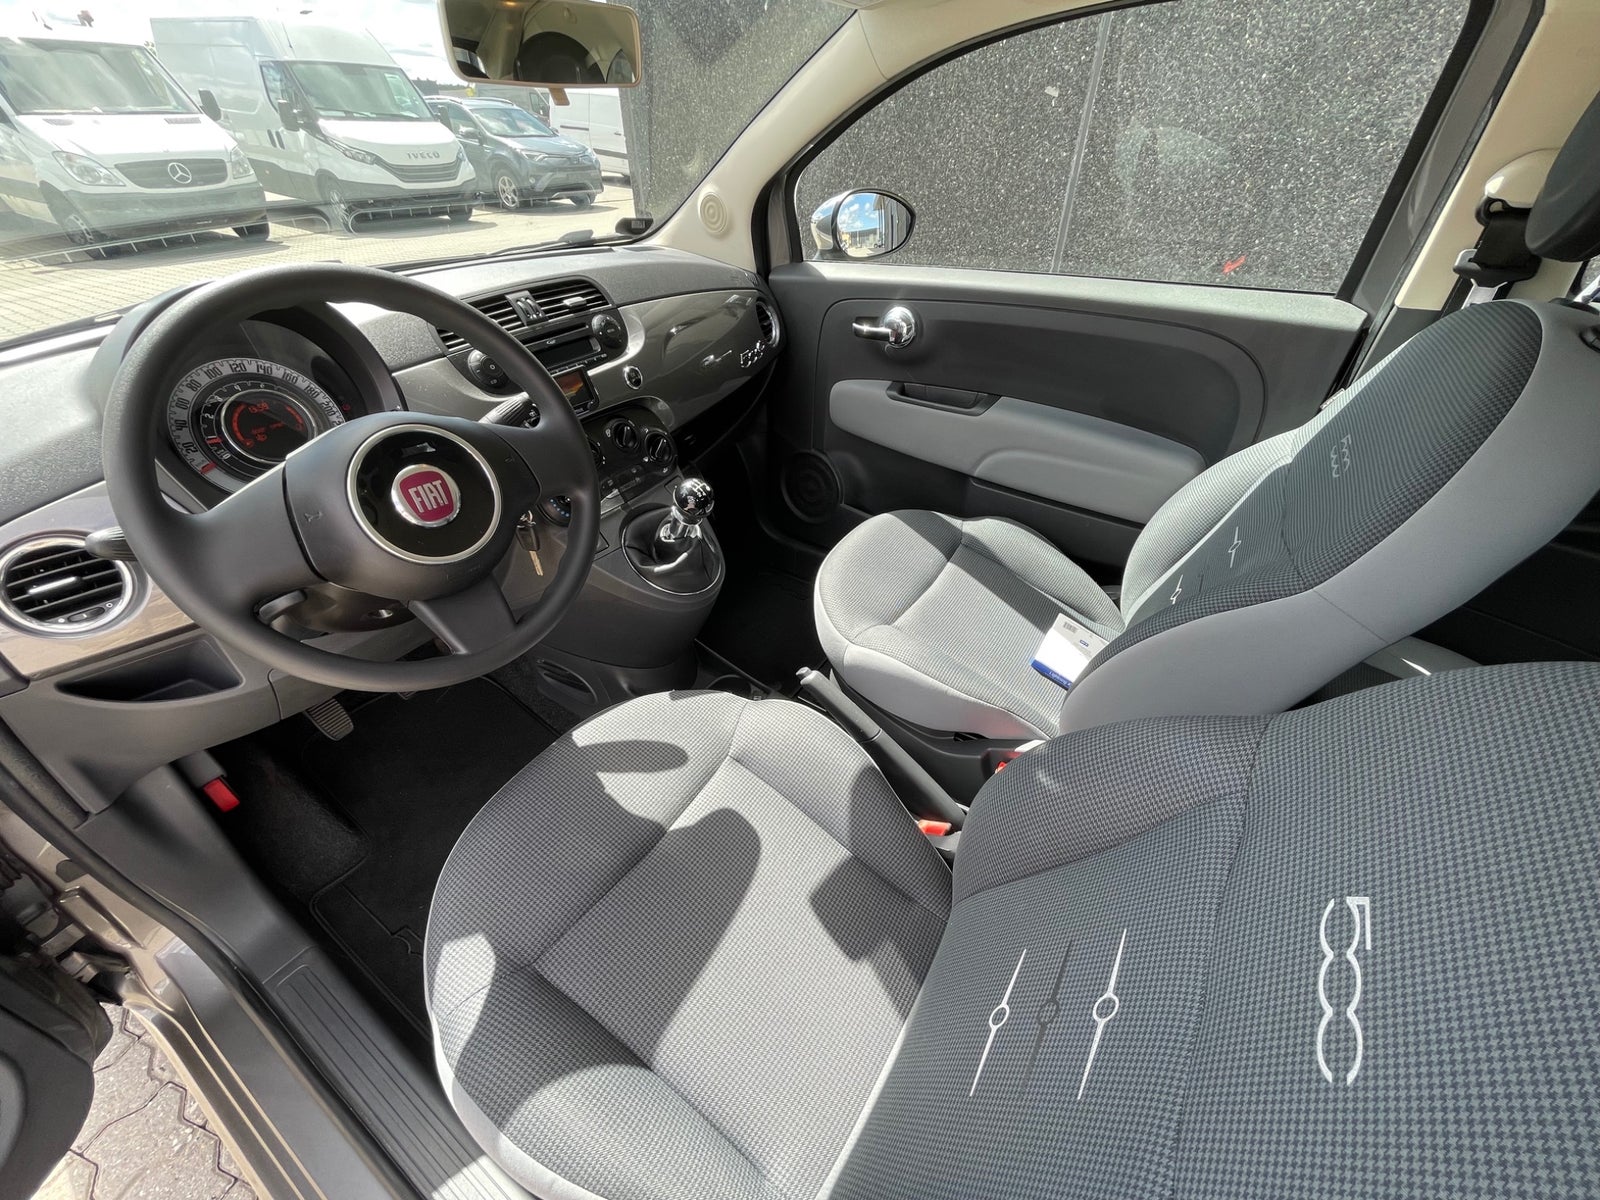 Fiat 500C 1,2 Popstar Benzin modelår 2014 km 157000 Grå ABS